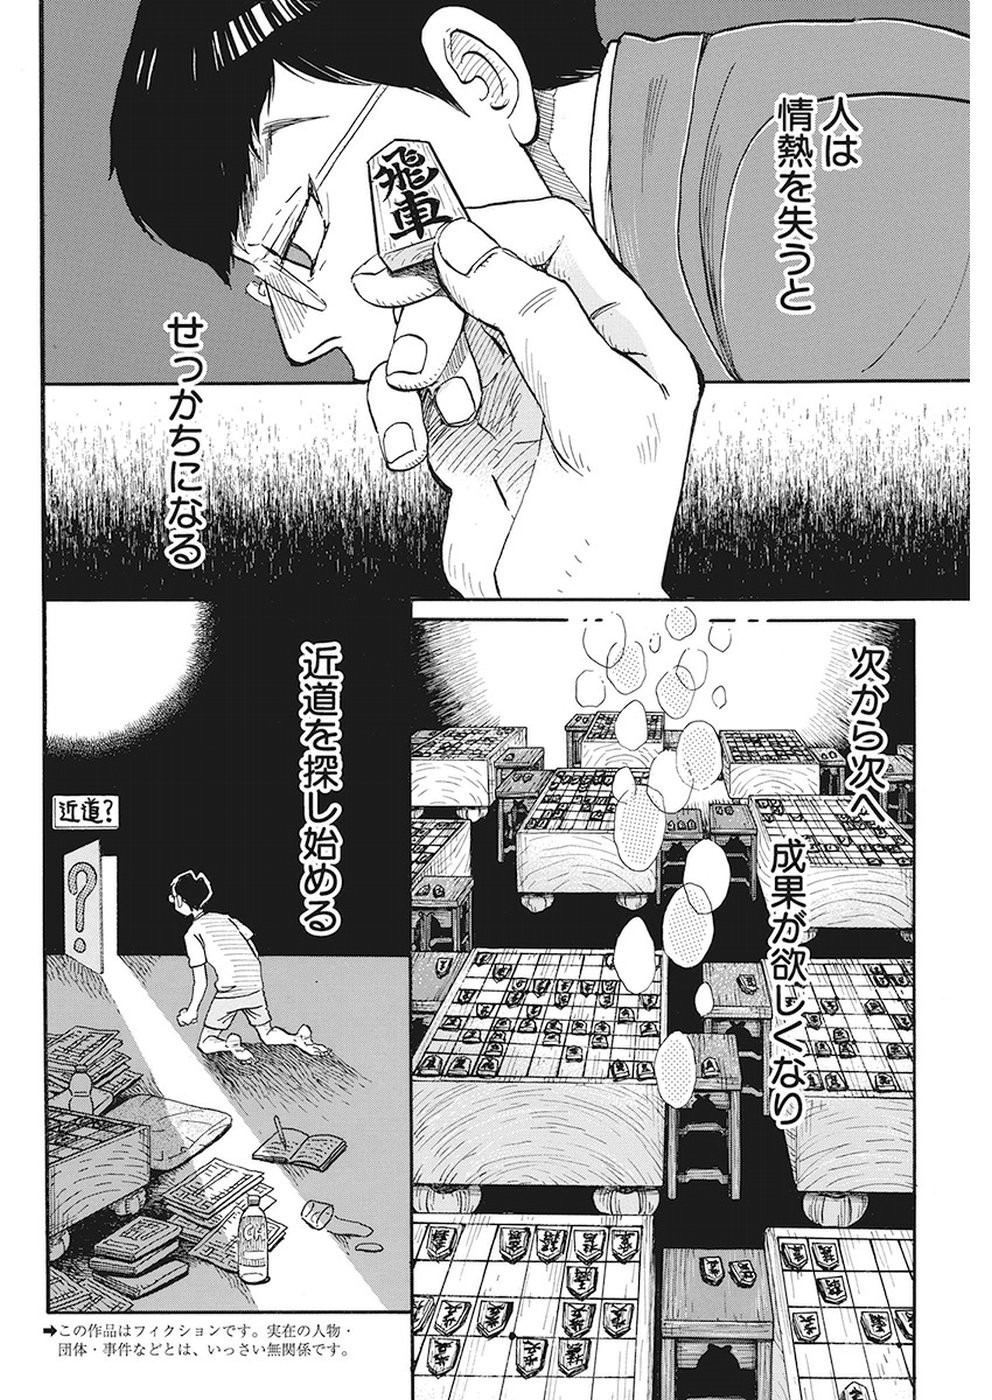 3 Gatsu no Lion - Chapter 159 - Page 2